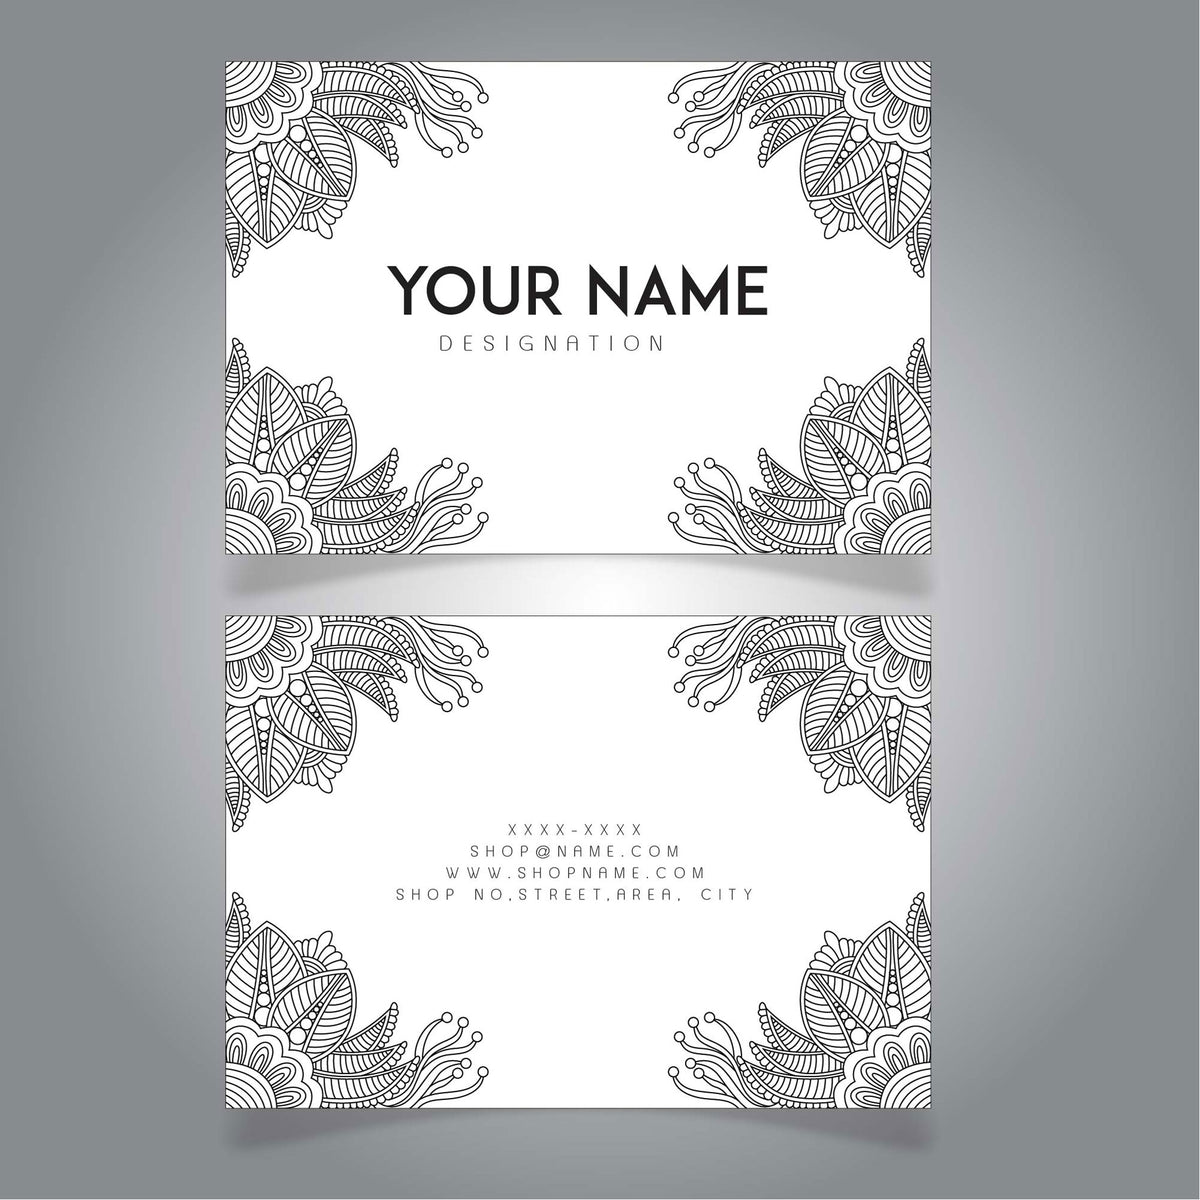 Plantable Black & White Floral Business Cards - 250 Cards